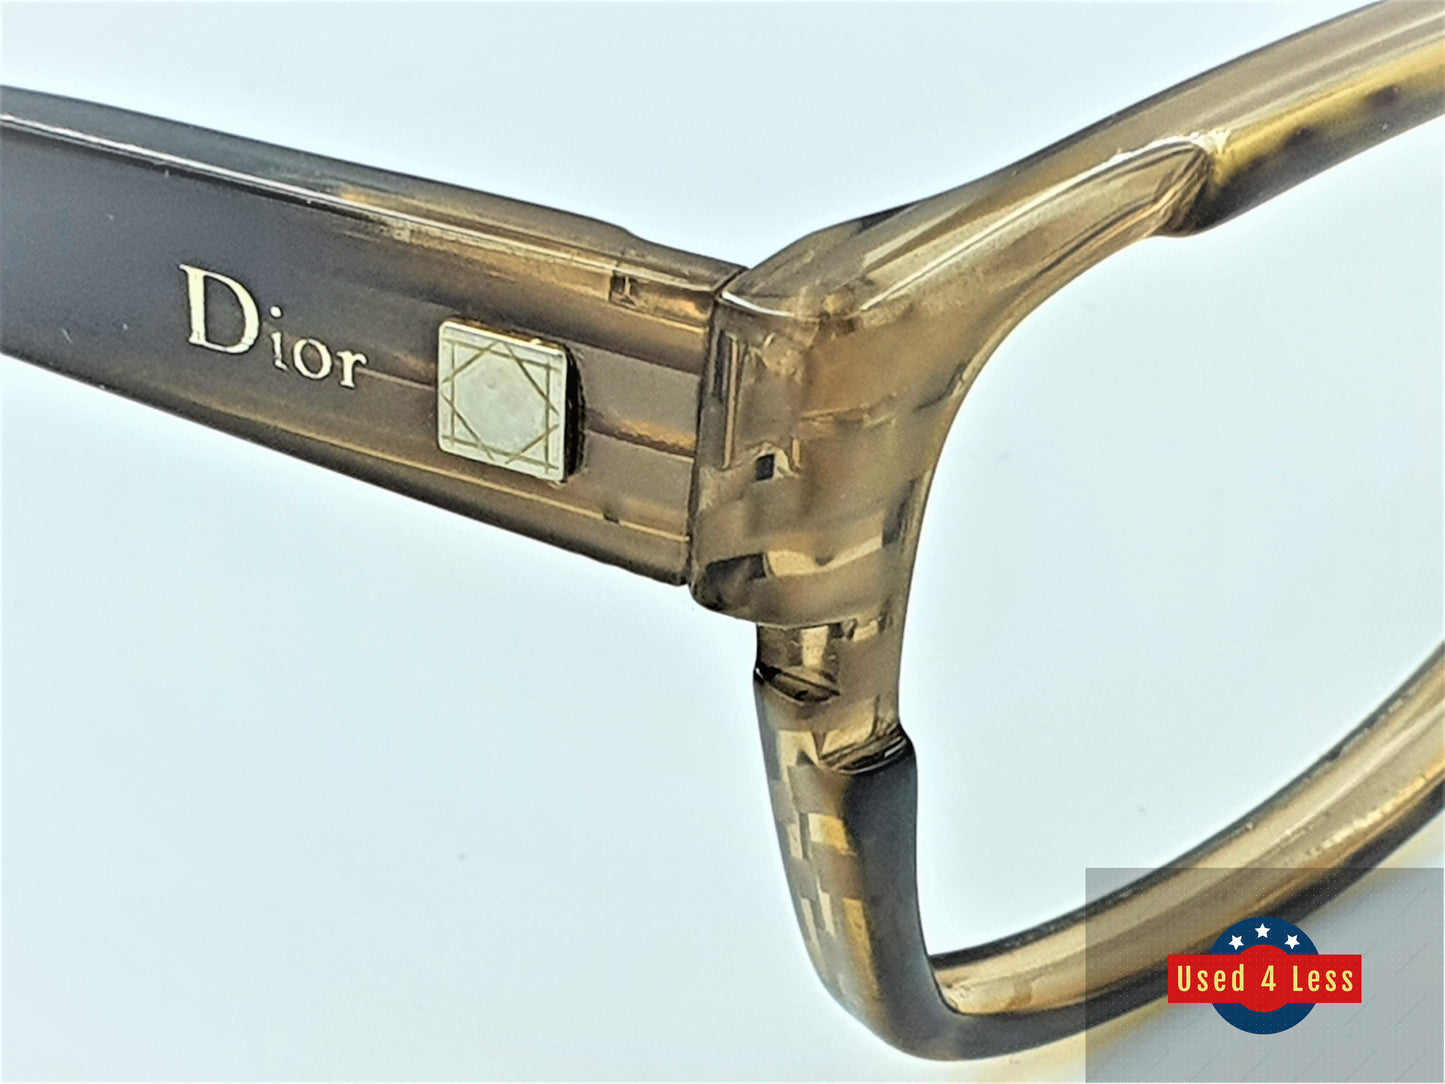 Christian Dior Modell: CD3191 157